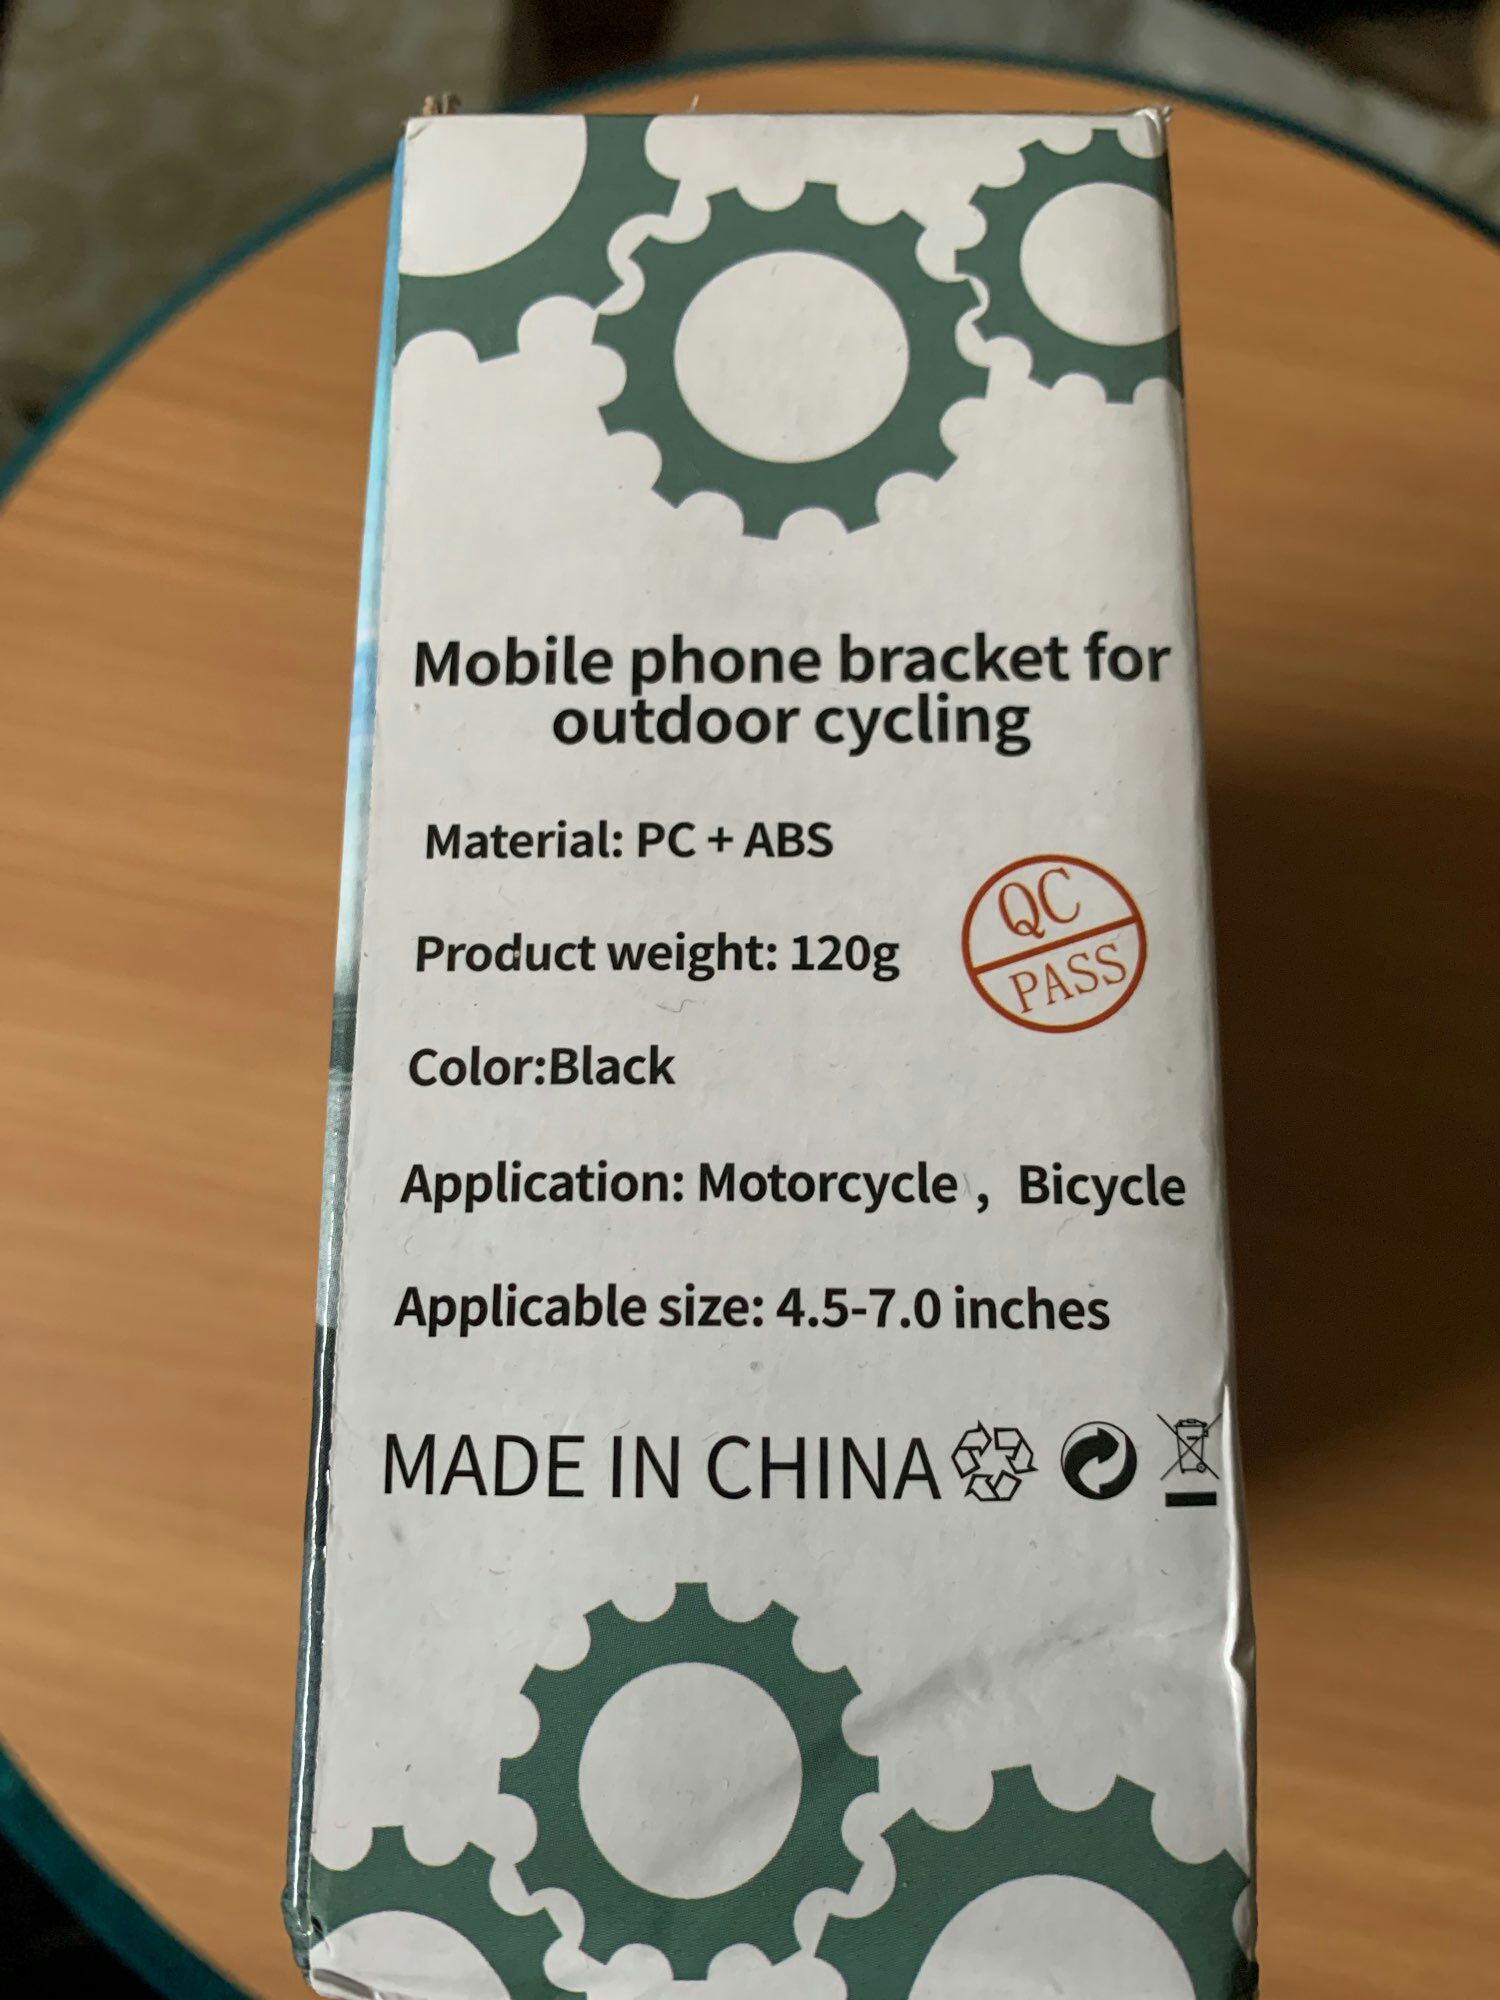 Holder pod smartfon do roweru